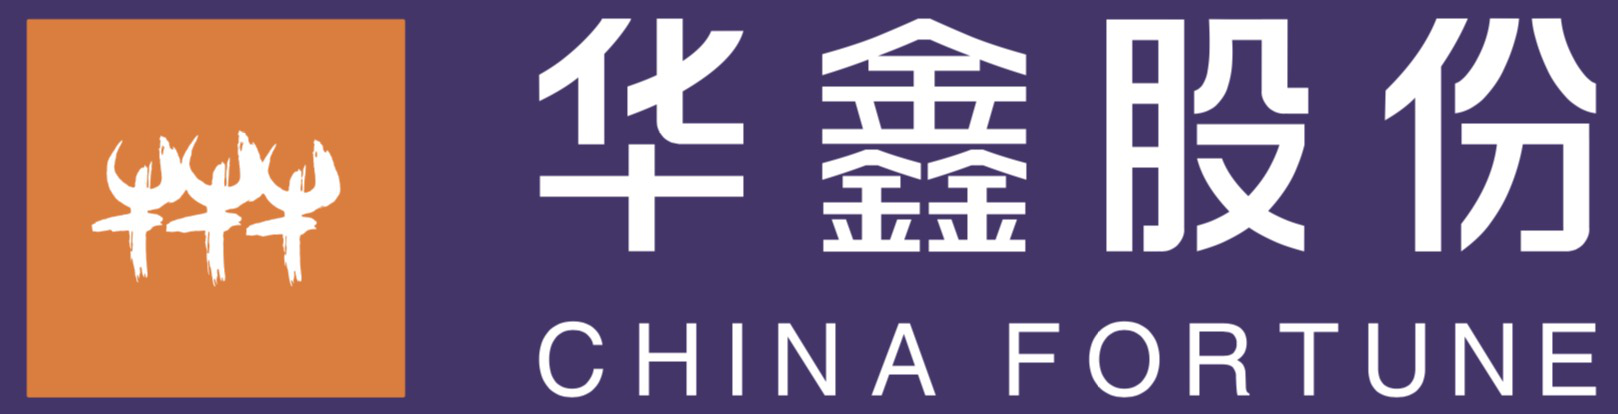 Shanghai Chinafortune Co., Ltd.